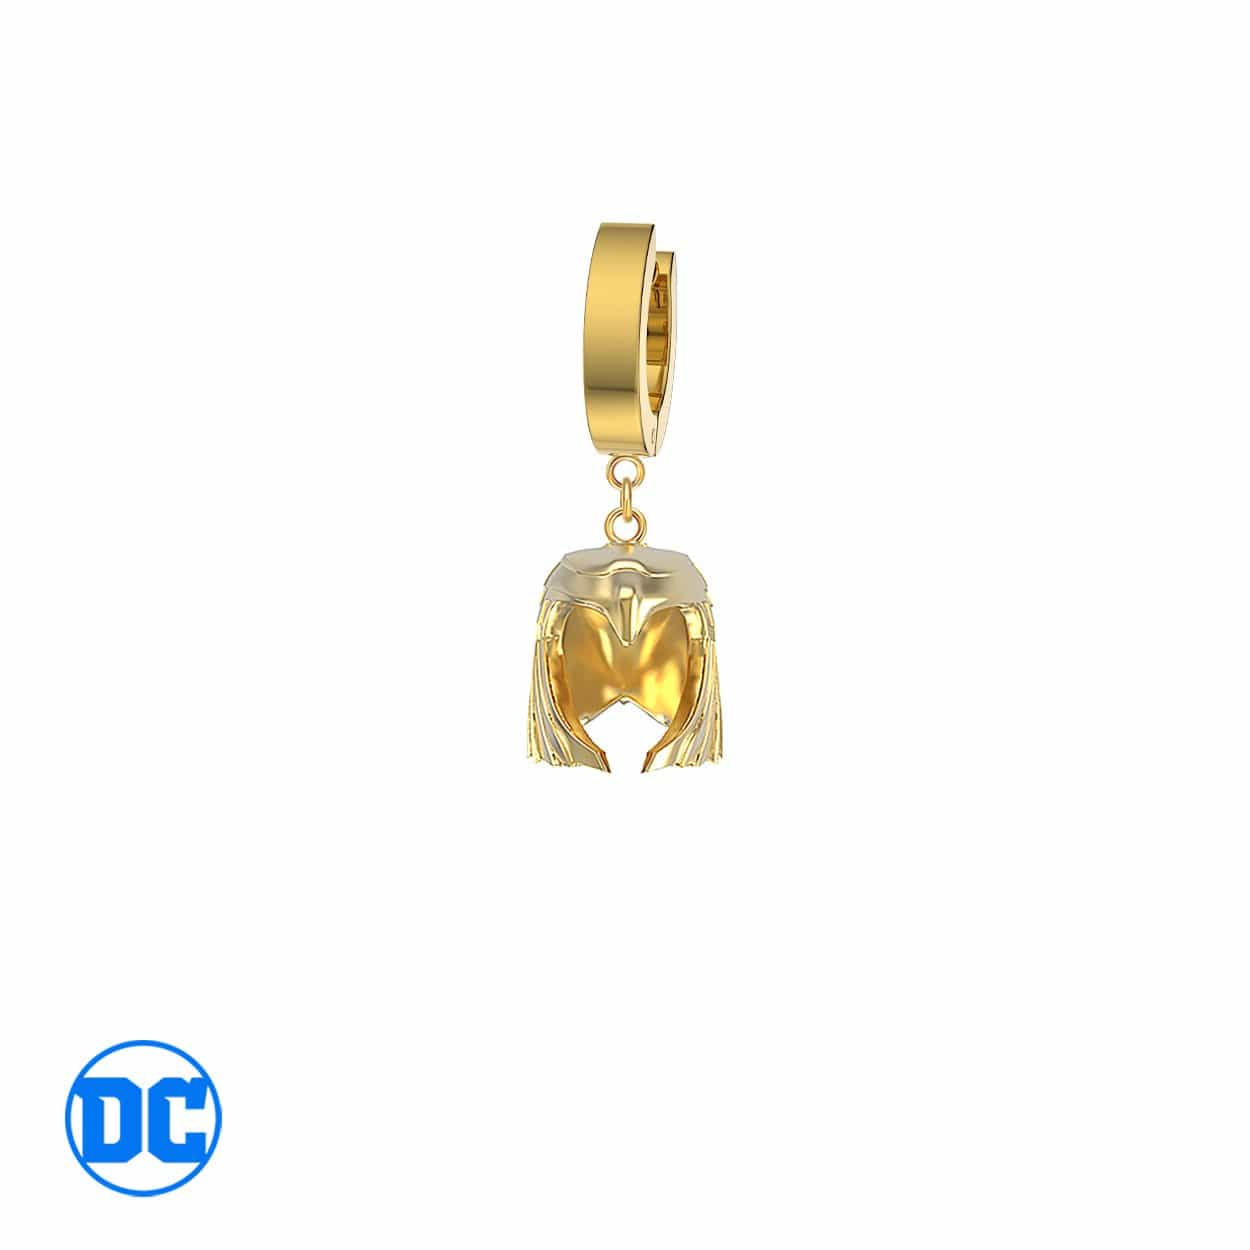 DC Comics™ Golden Armor Earring Mister SFC